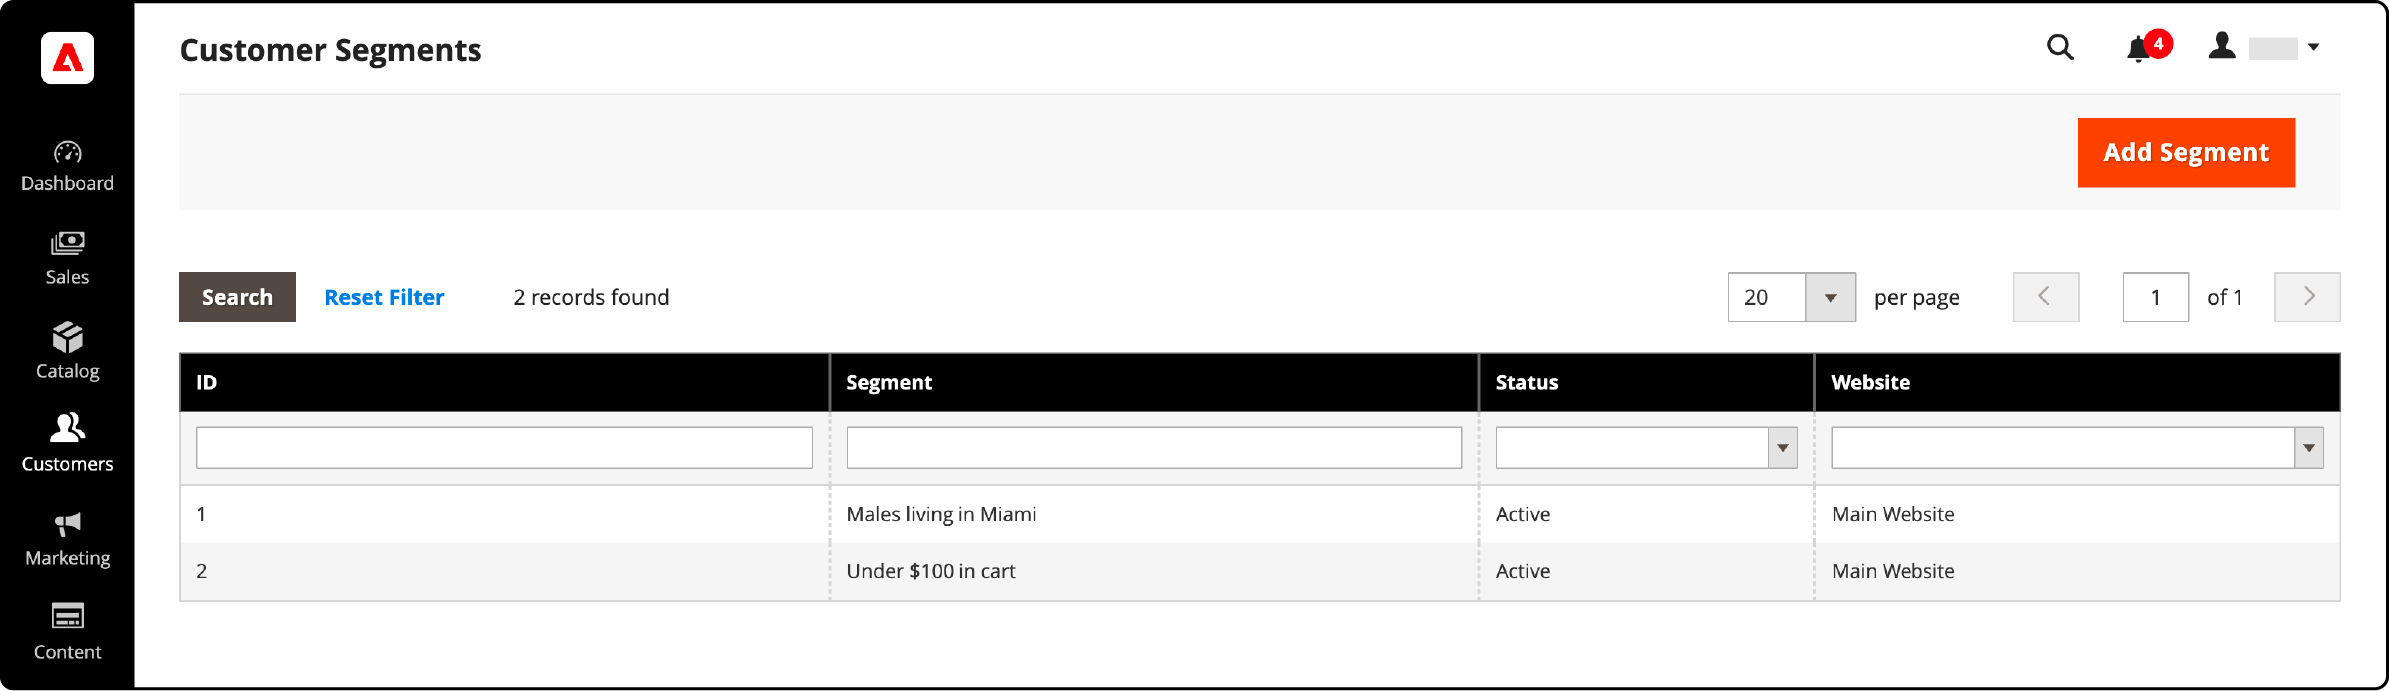 Screenshot of Magento's customer segmentation module interface